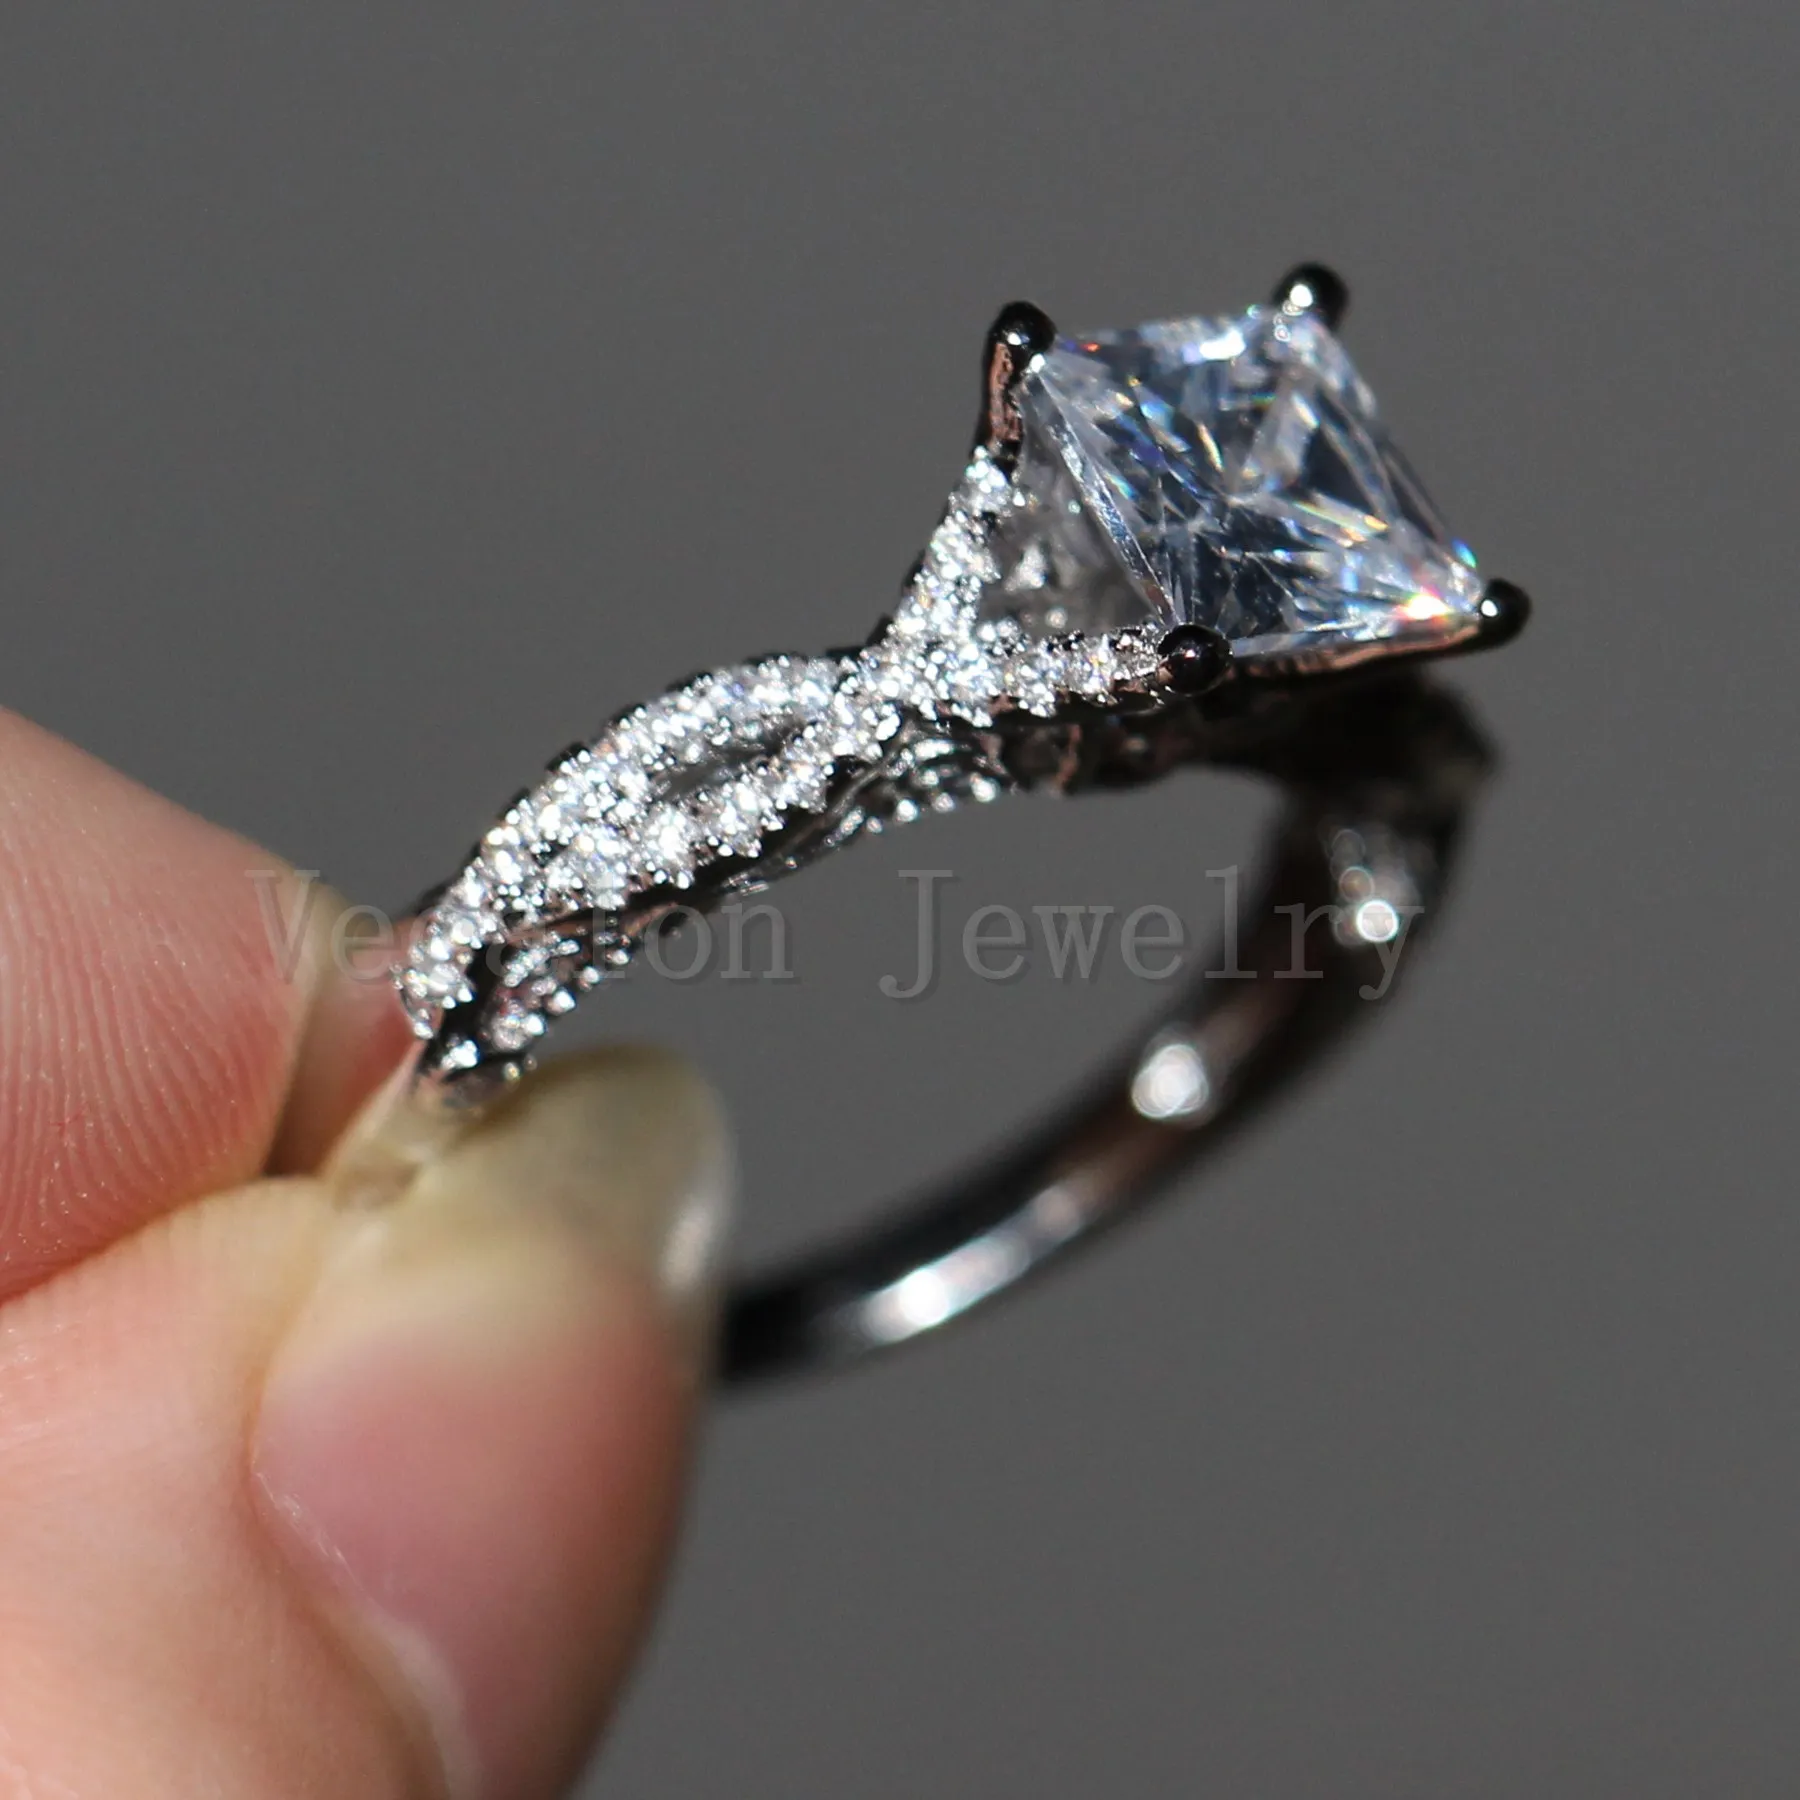 Vecalon 2016 낭만적 인 골동품 여성 반지 2CT 시뮬레이션 된 다이아몬드 CZ 925 스털링 실버 약혼 결혼식 밴드 반지 여성을위한